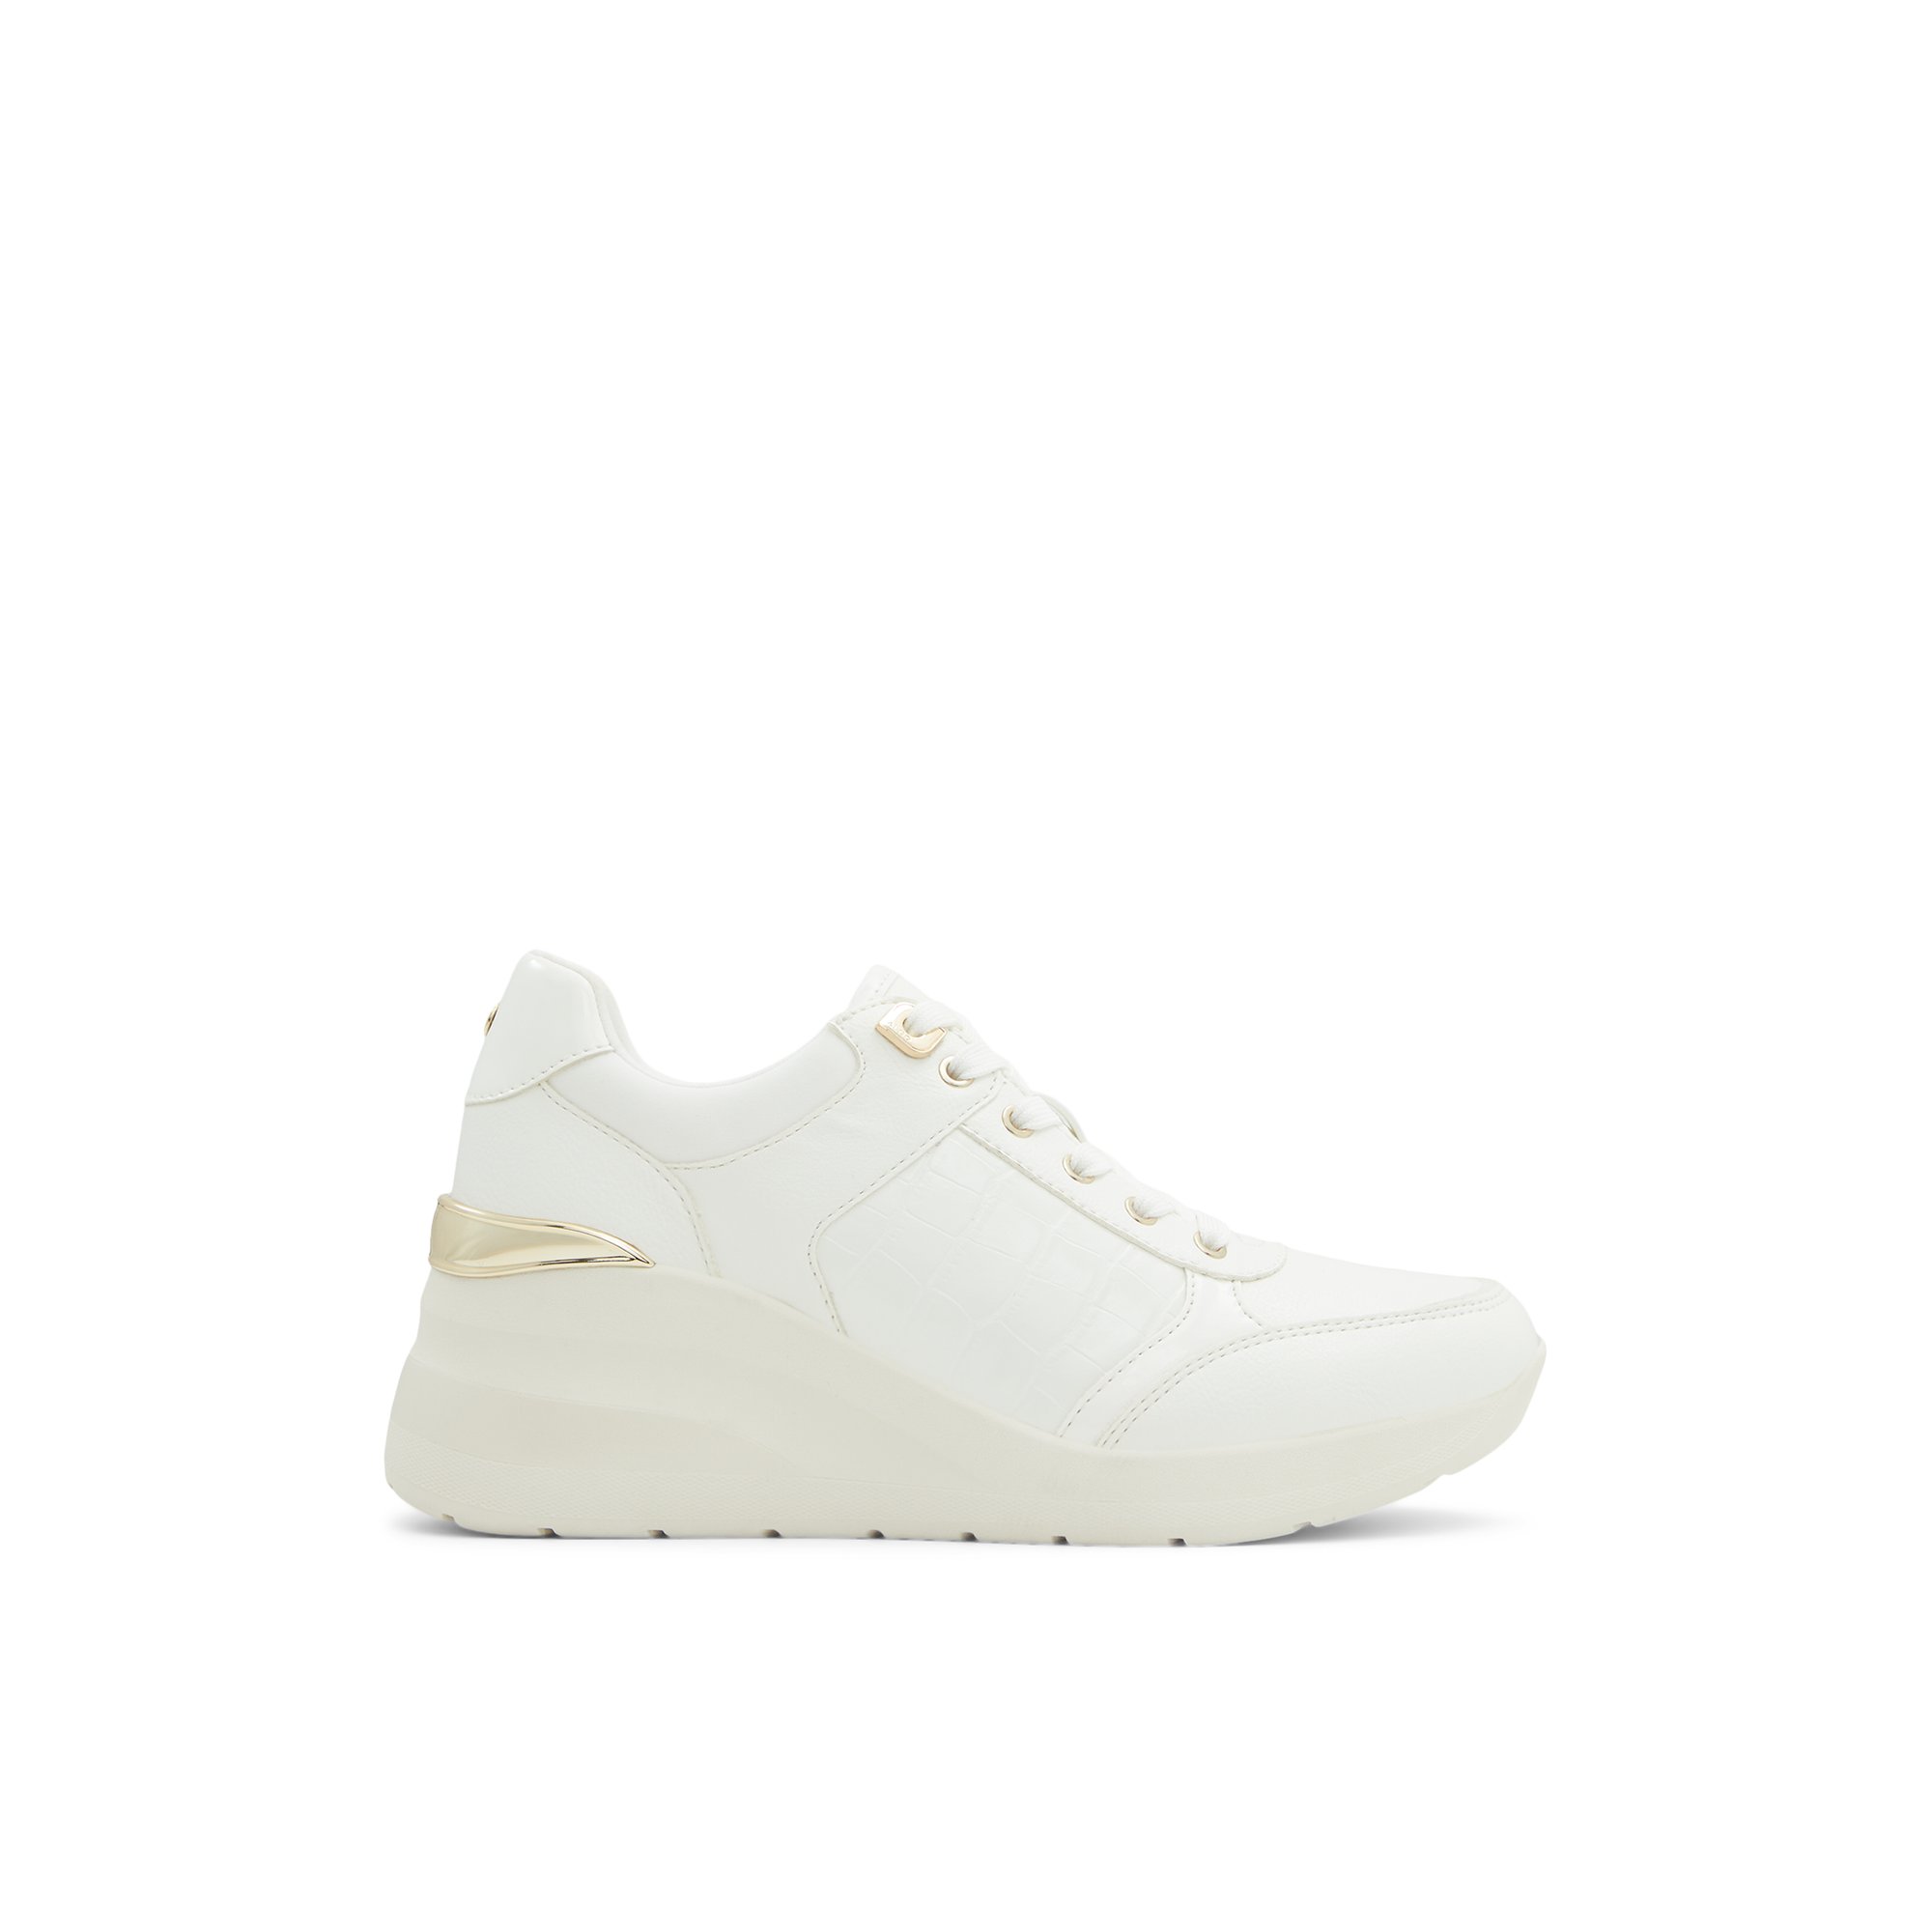 ALDO Iconistep - Women's Athletic Sneaker Sneakers - White